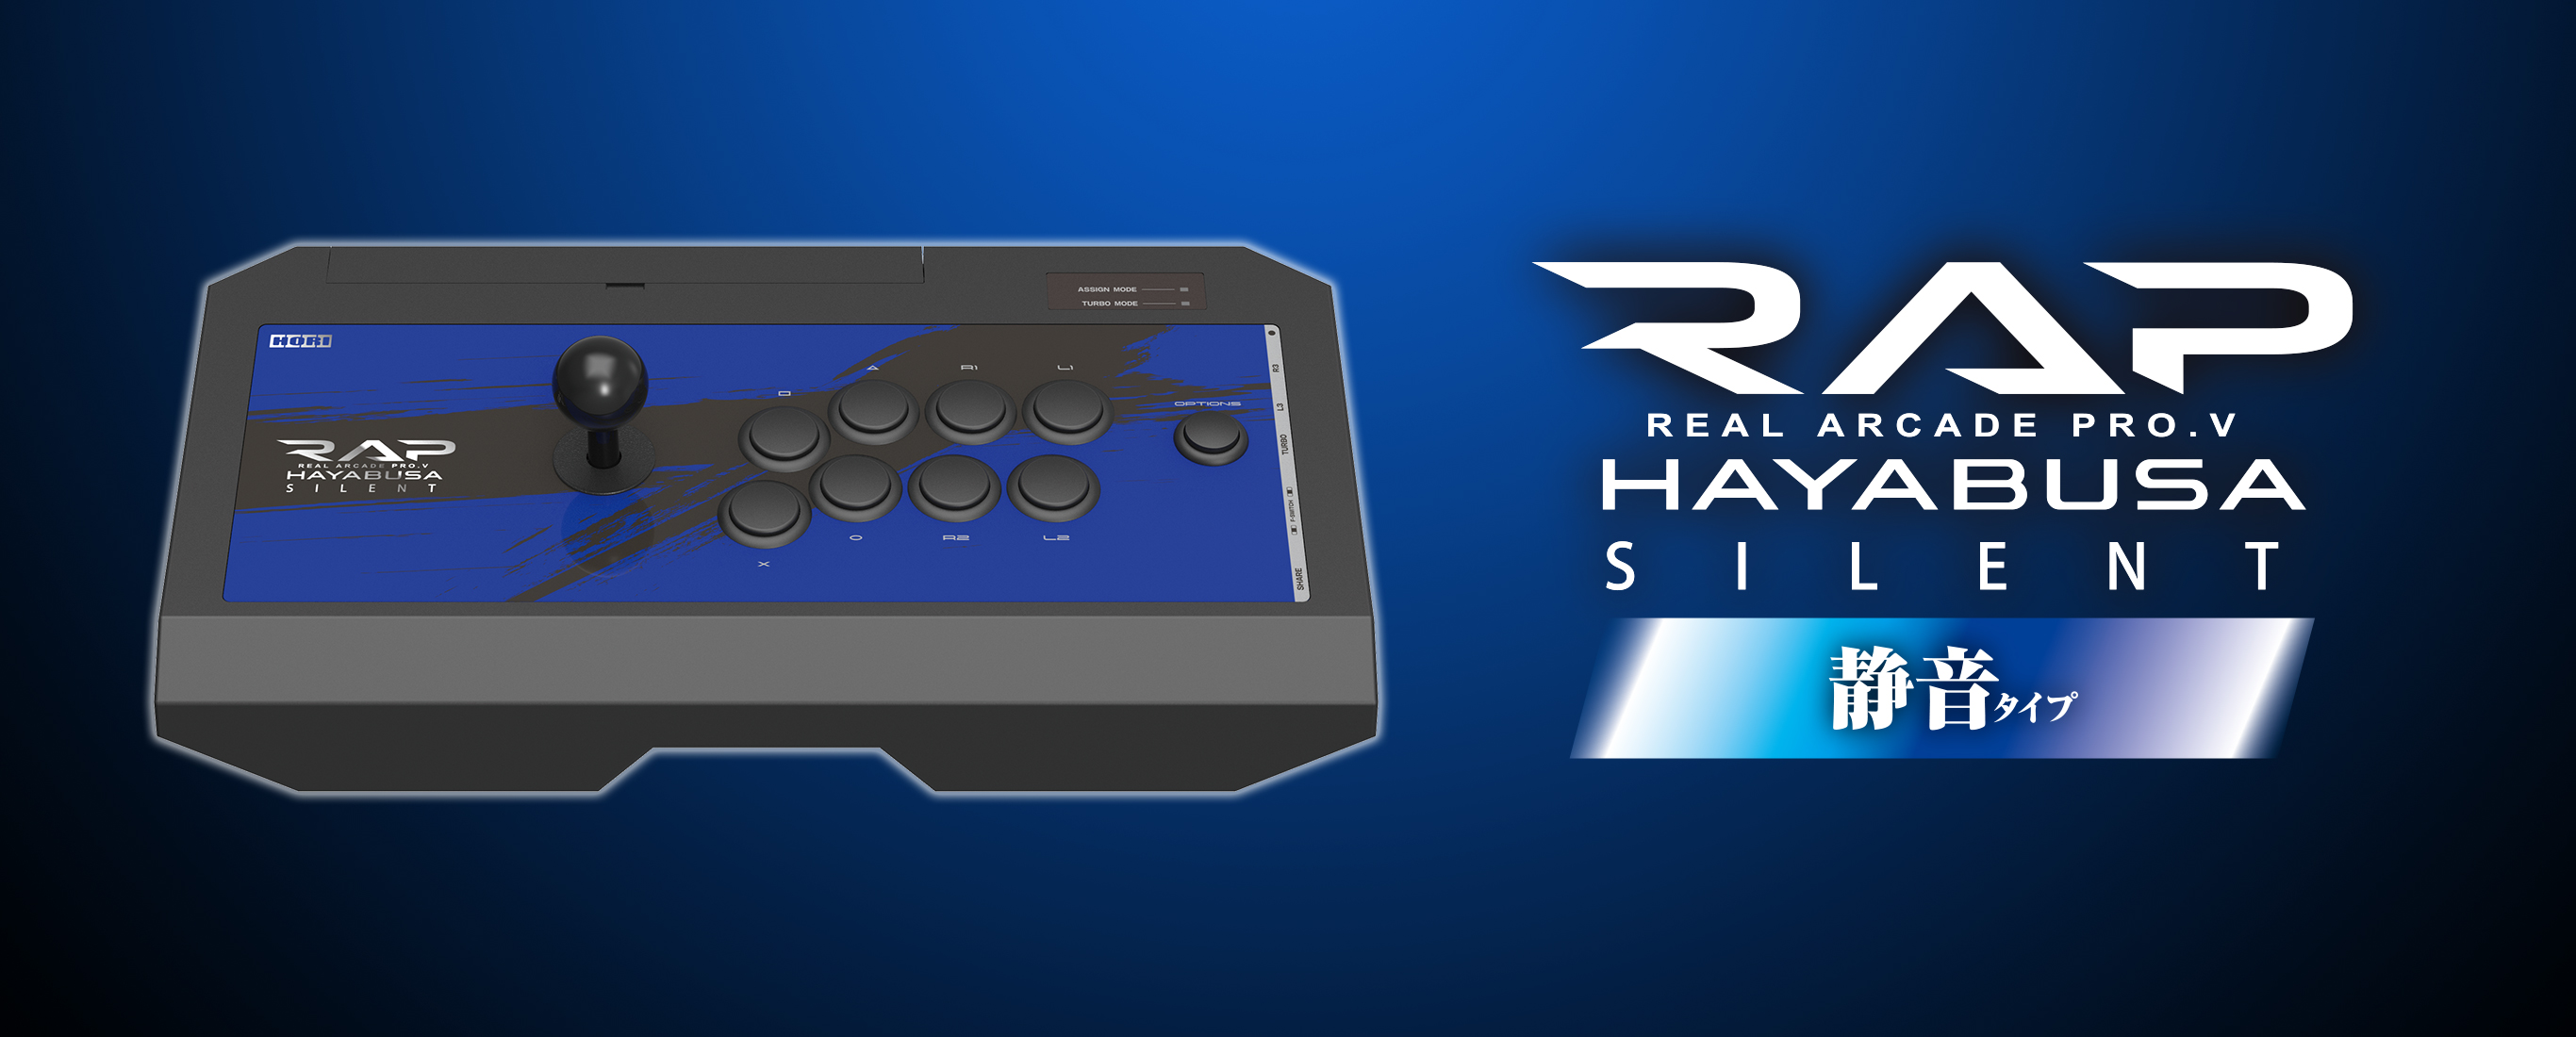 PS4/PC Hori Real Arcade Pro.V Silent Hayabusa 格鬥搖桿(PS4-090